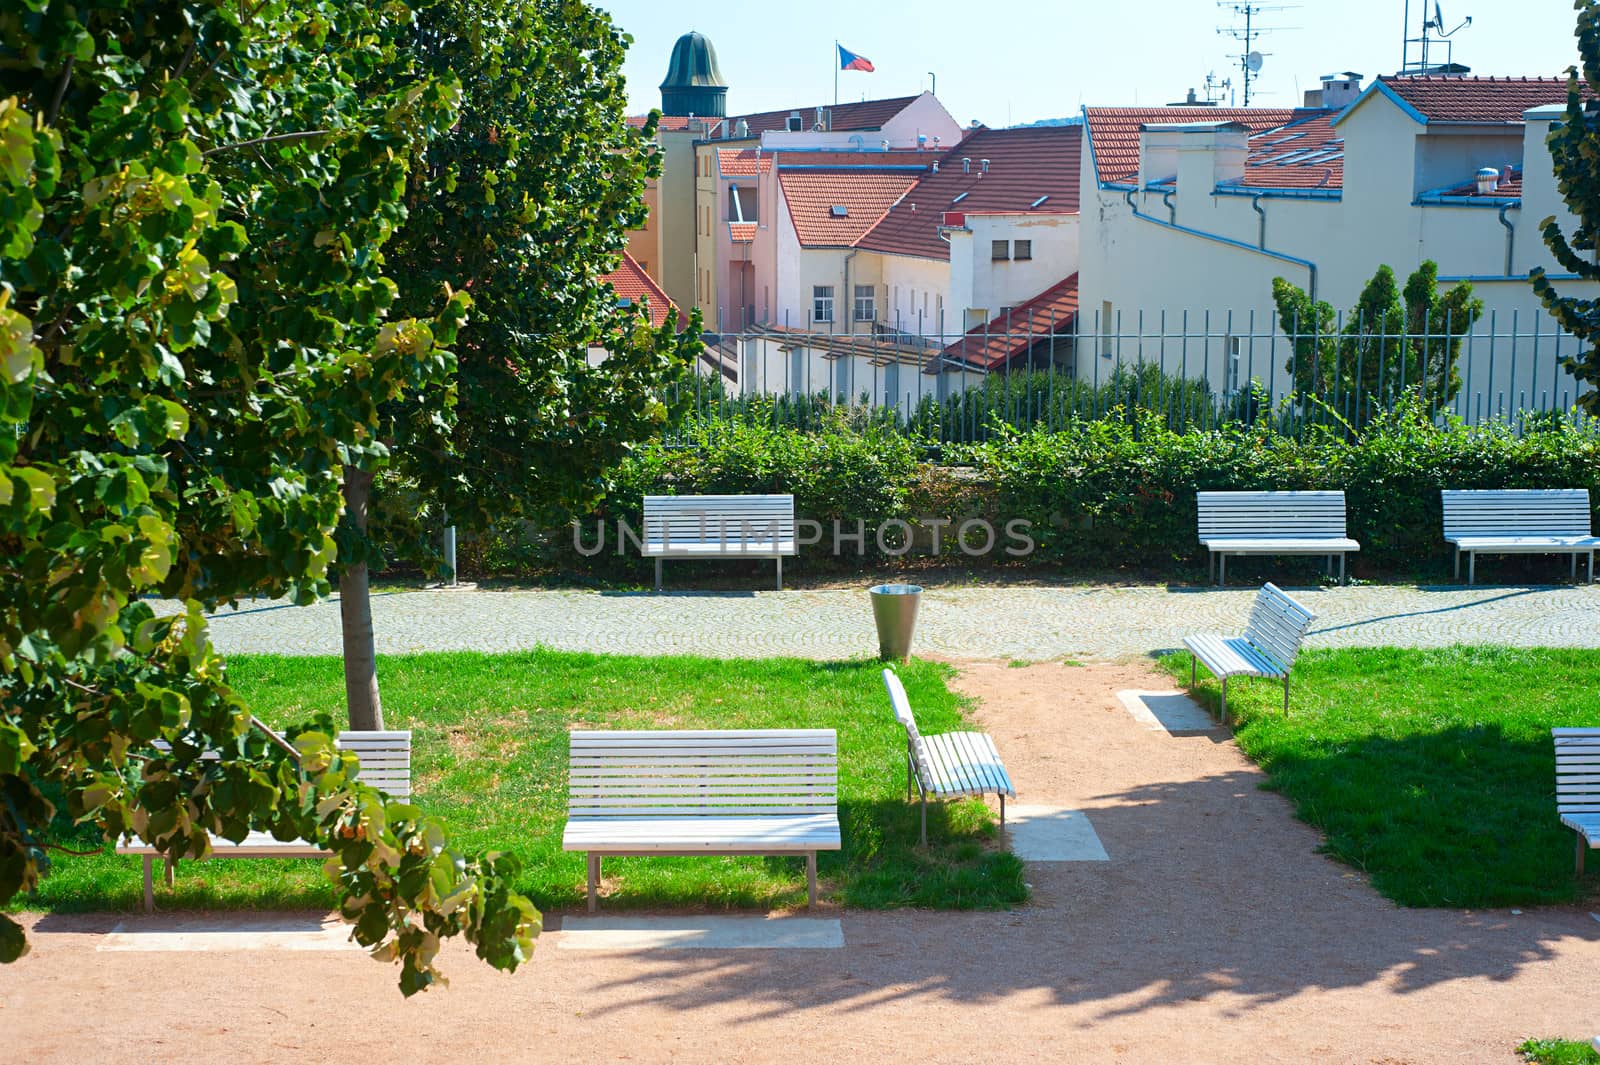 Park at the city centre of Brno, Czech Republic